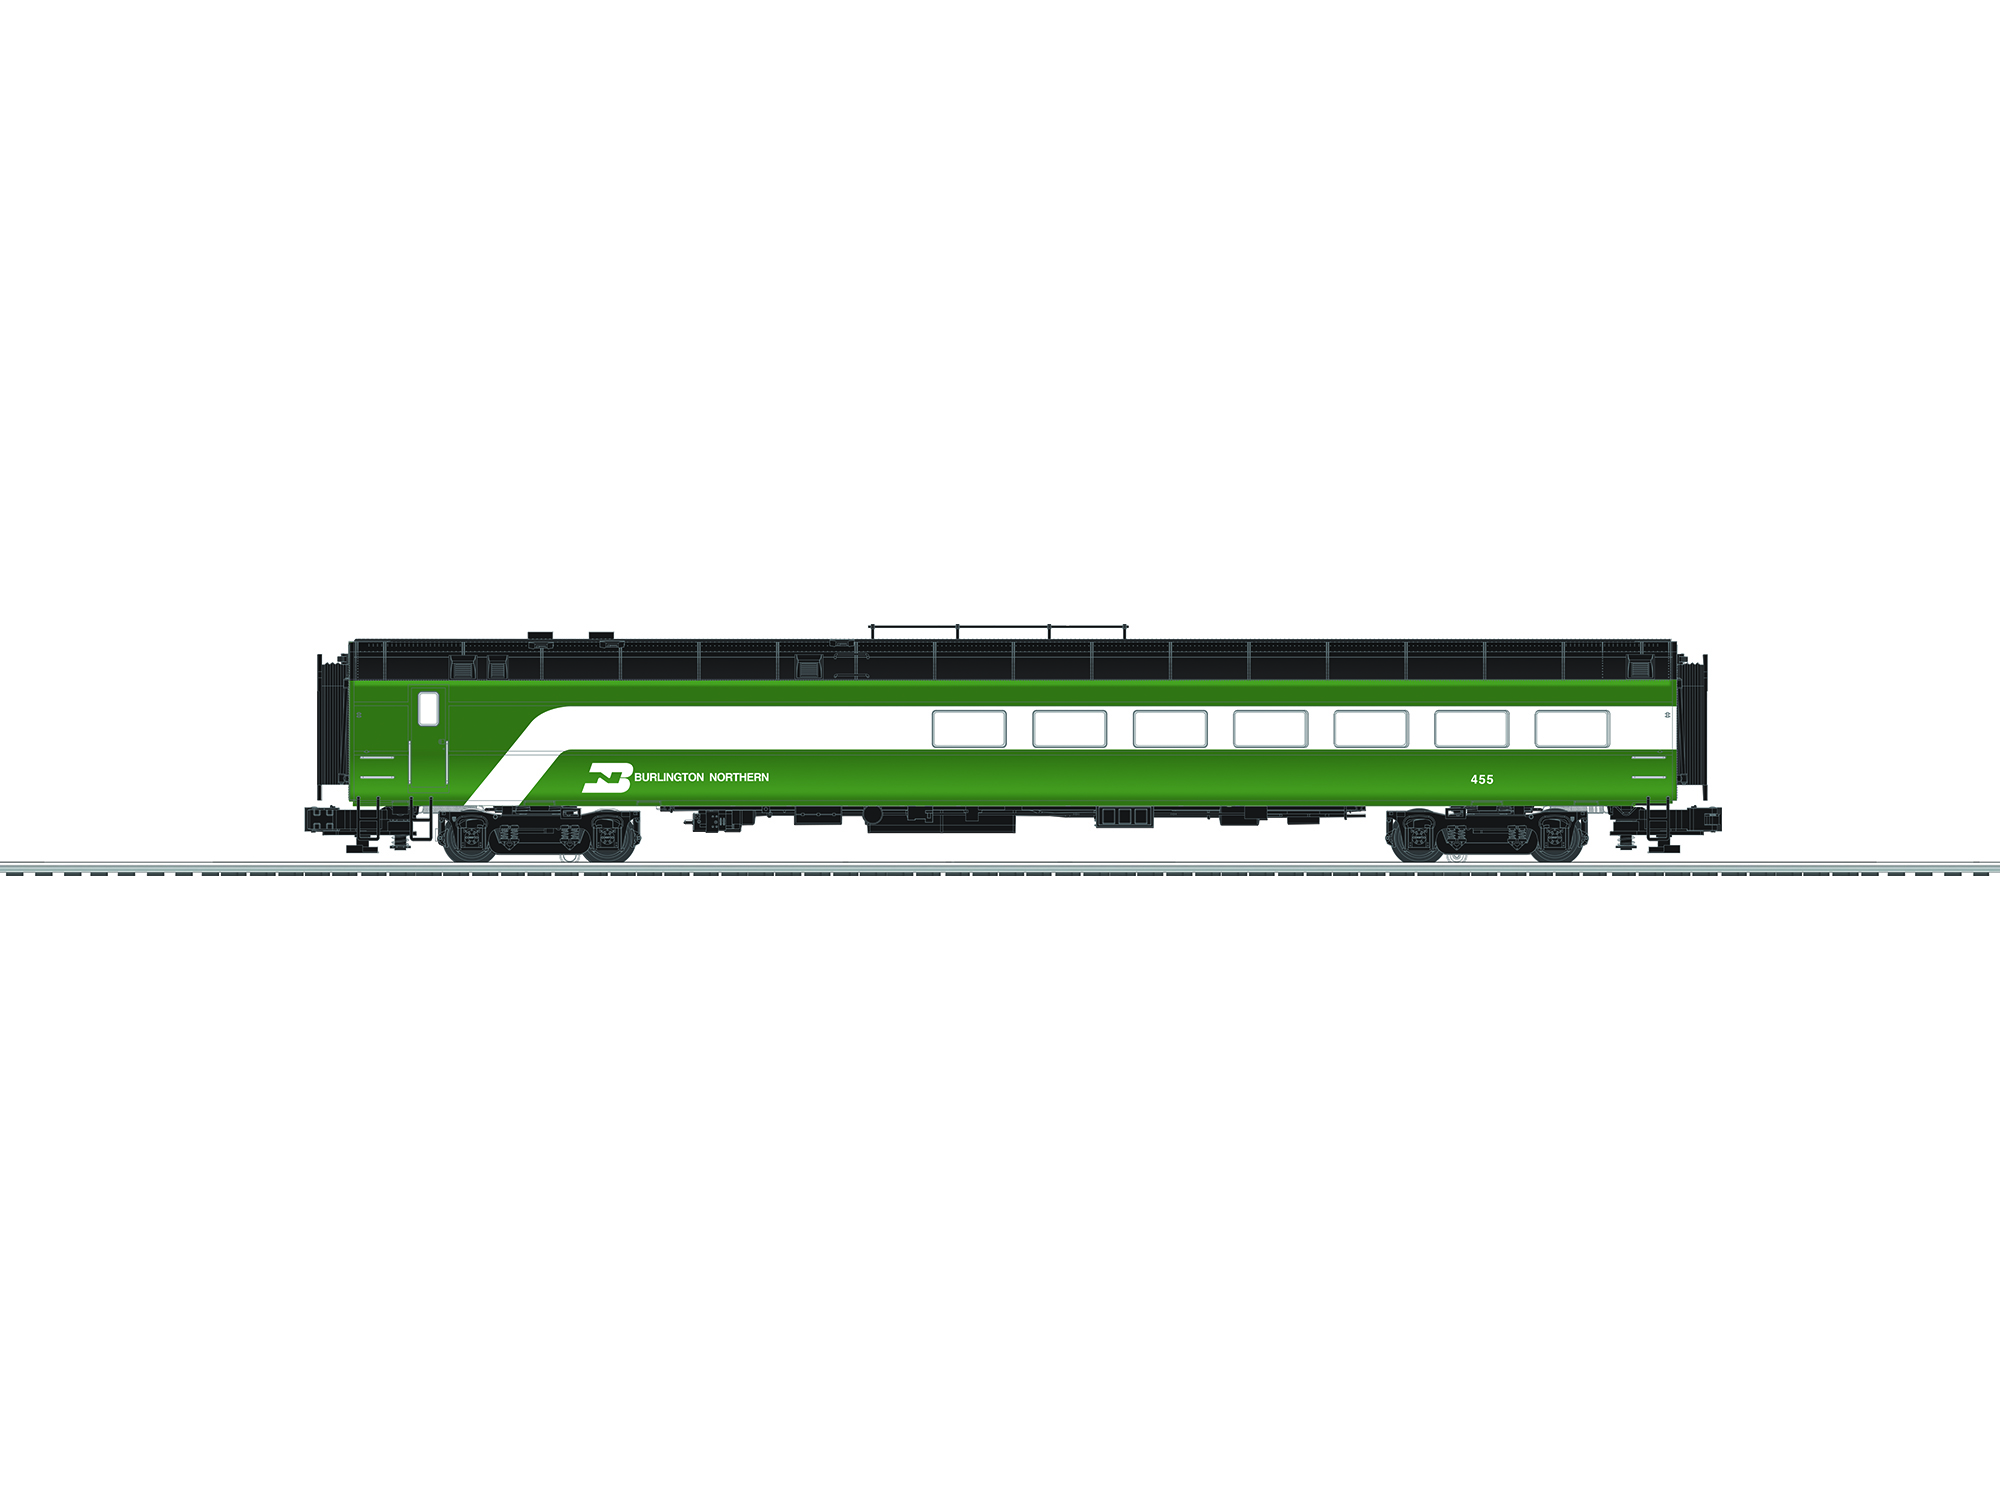 LIONEL BN 21" SCALE STATION SOUND DINER O GAUGE train coach 6-84053 NEW 